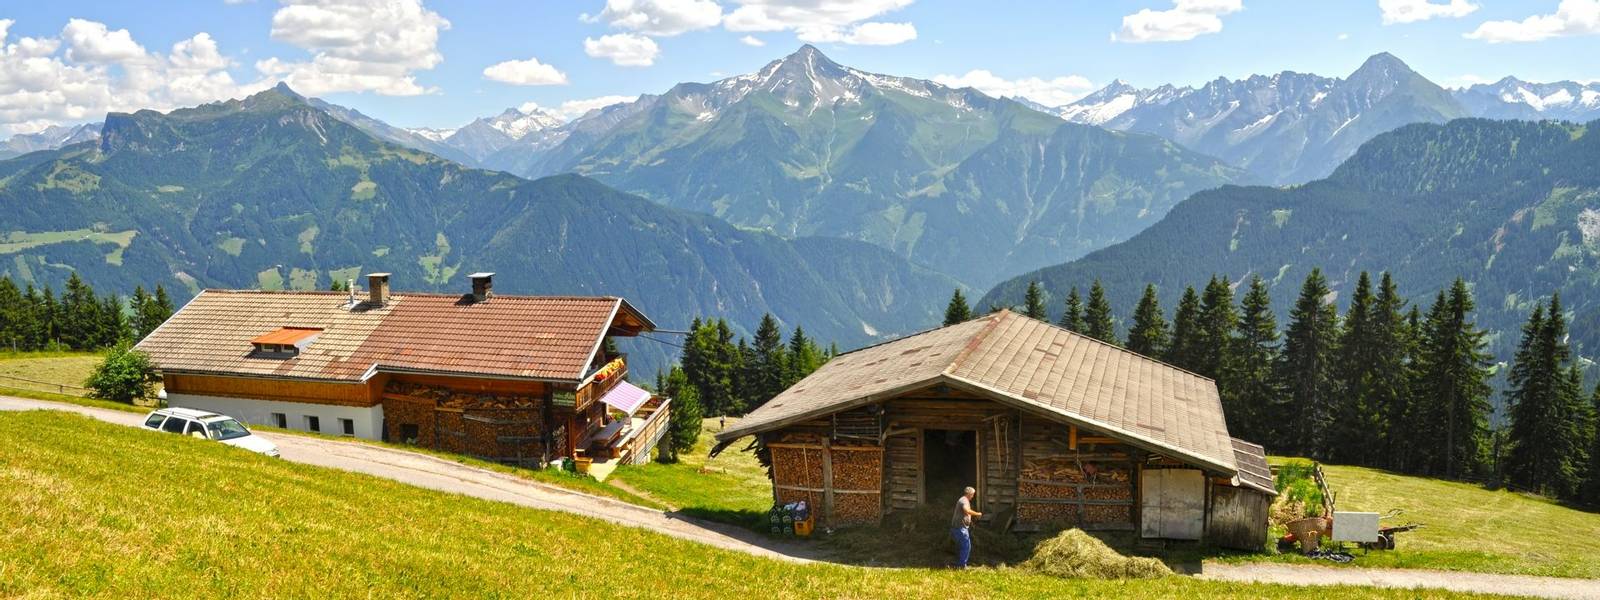 Austria - Mayrhofen - AdobeStock_79507926.jpeg